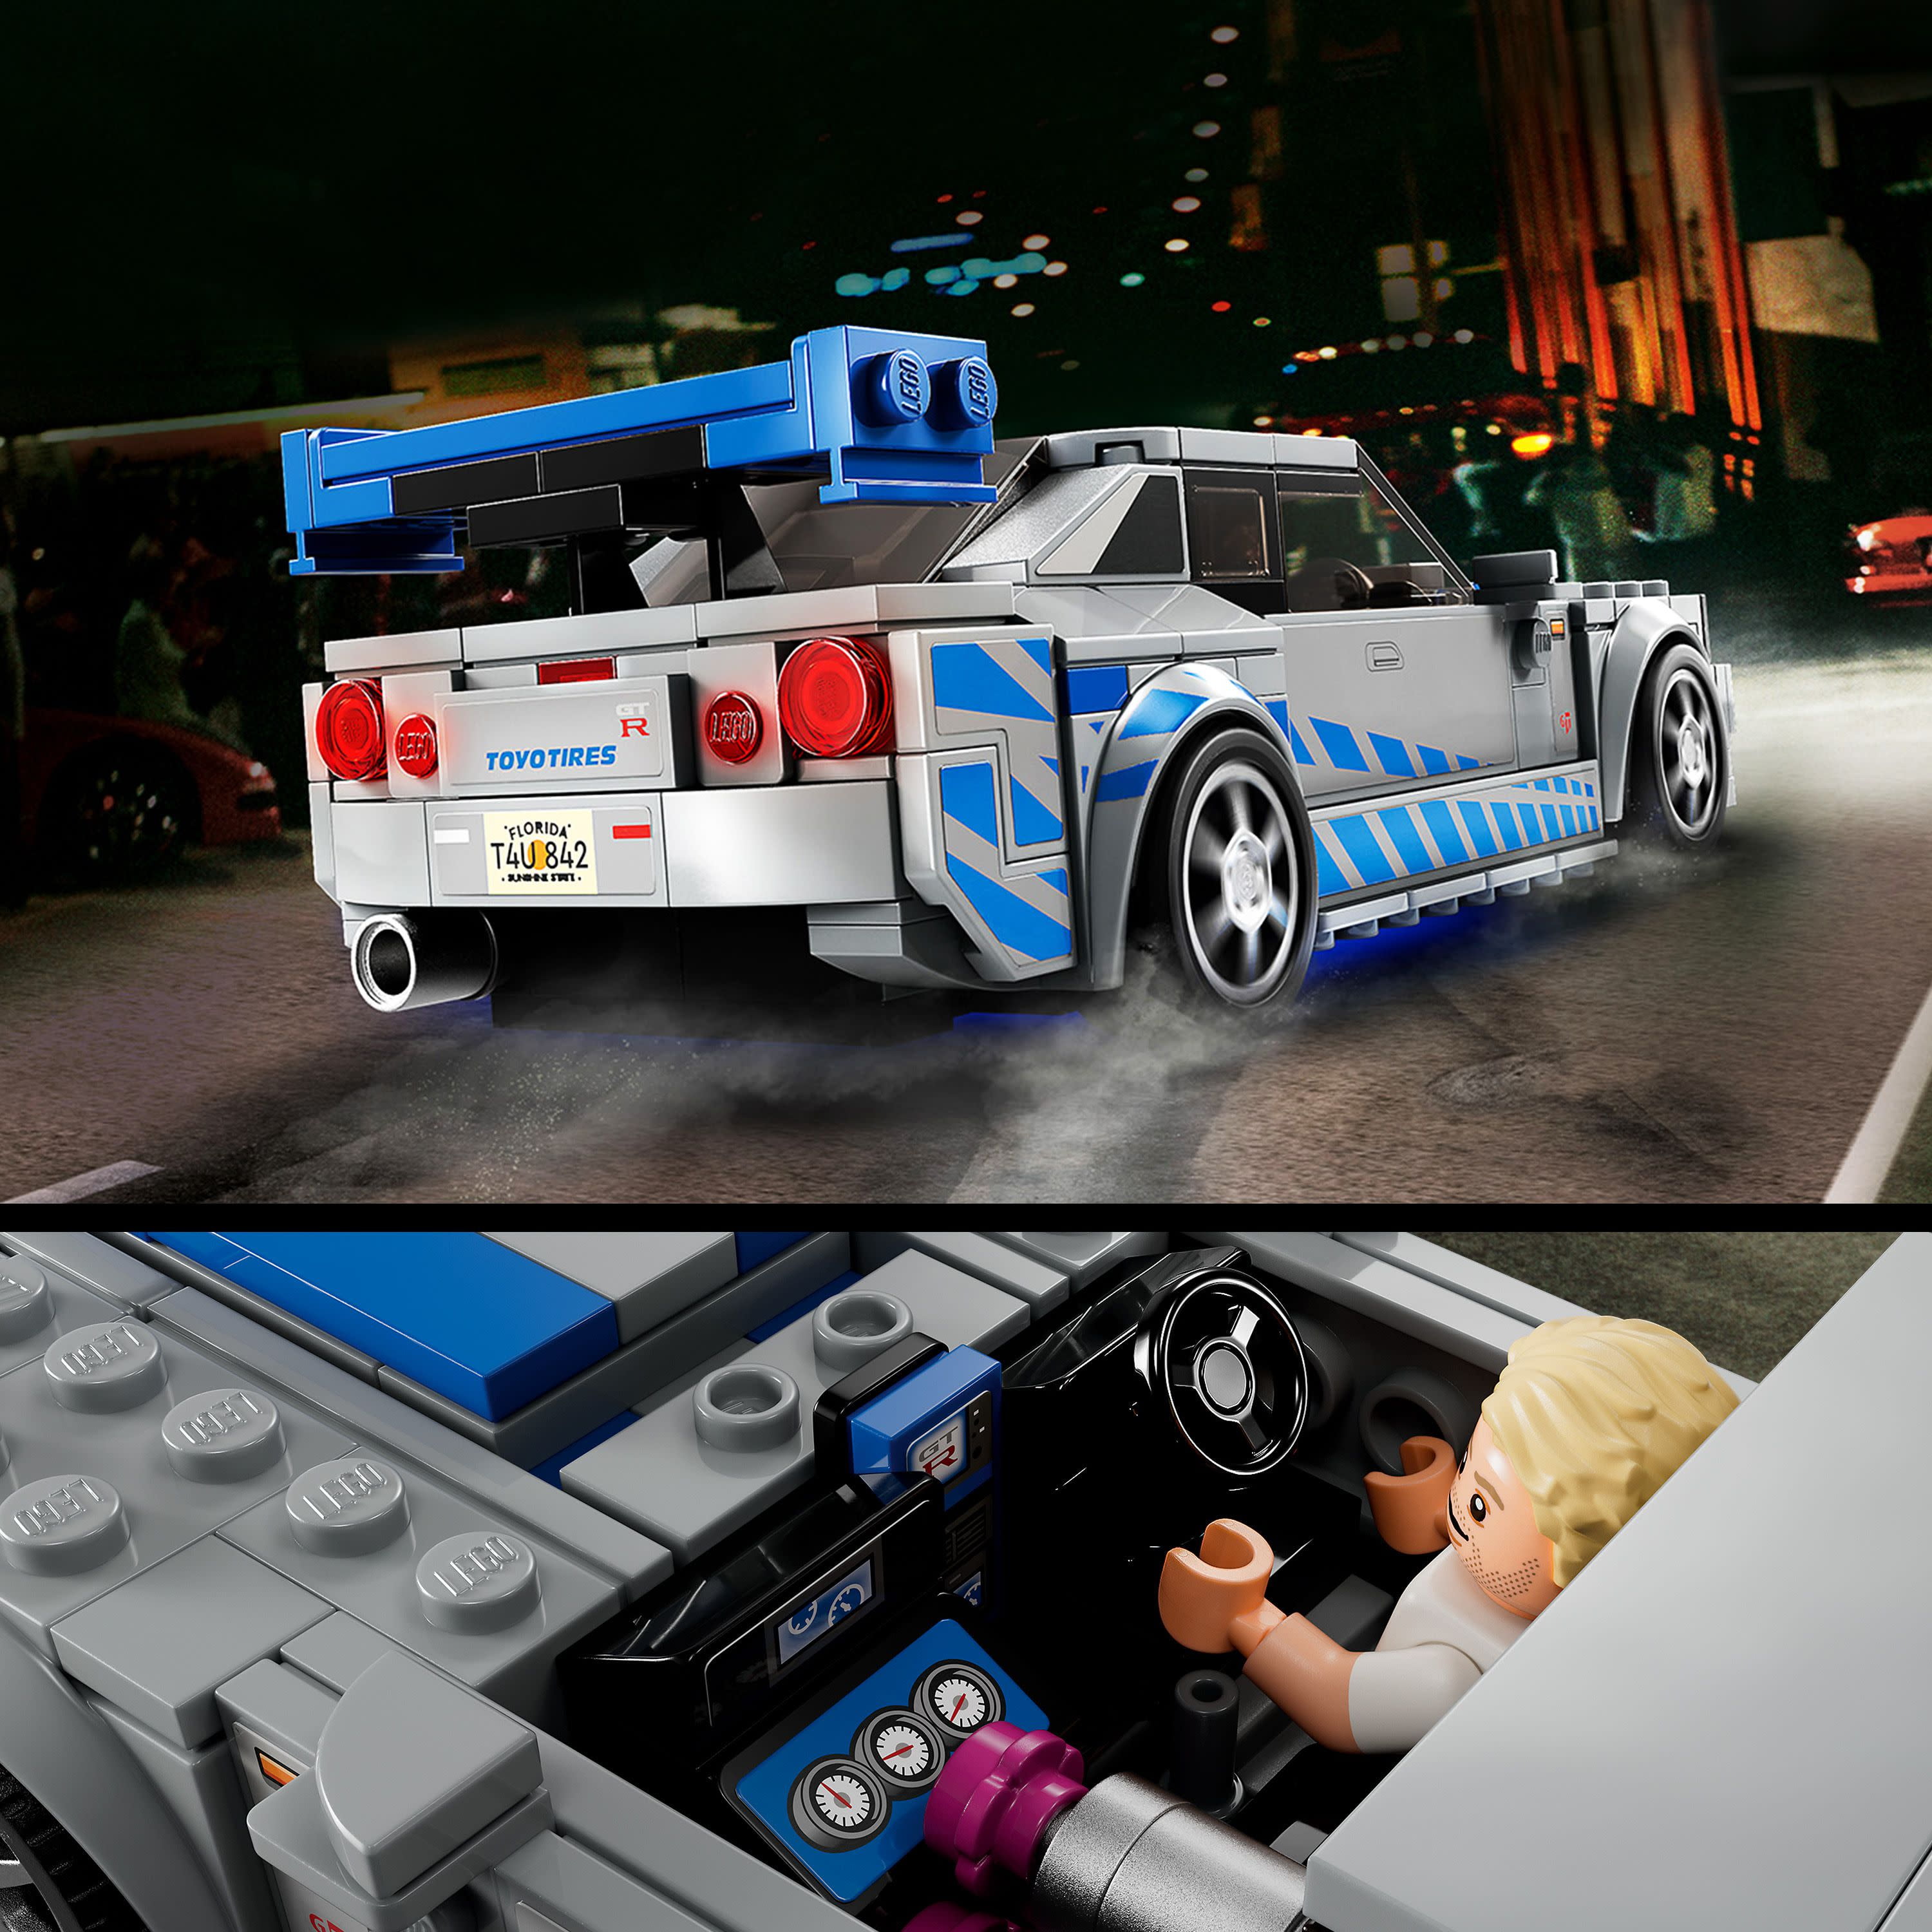 LEGO 76917 Nissan Skyline GT-R (R34) 2 Fast 2 Furious - LEGO Speed Cha  Condition Nouveau.